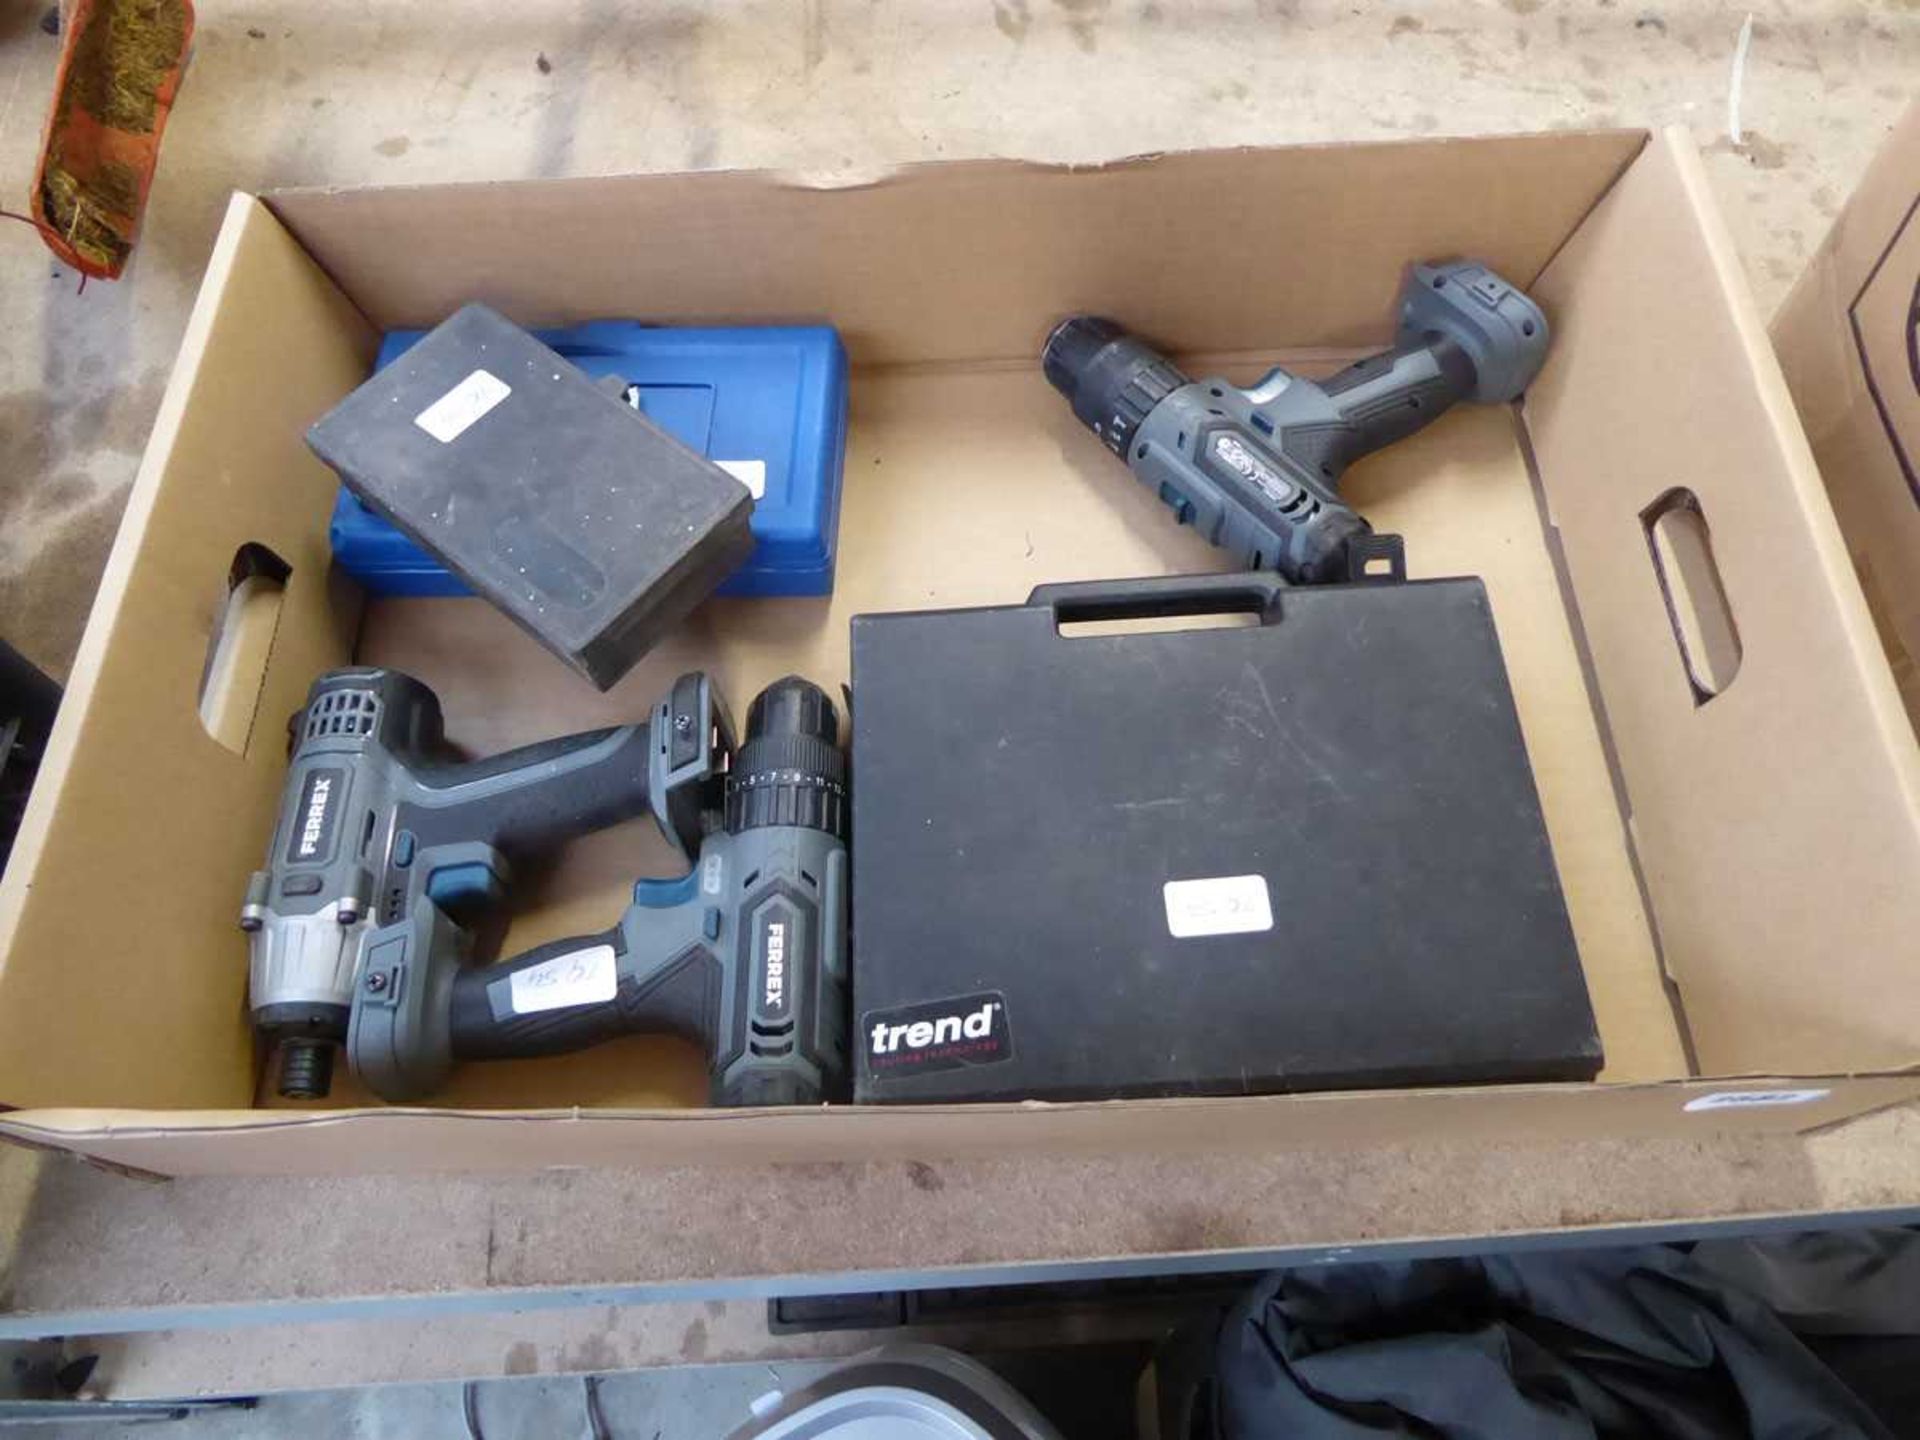 Box containing 3 Ferrex cordless drills, cased Trend, pipe cutting kit, etc.